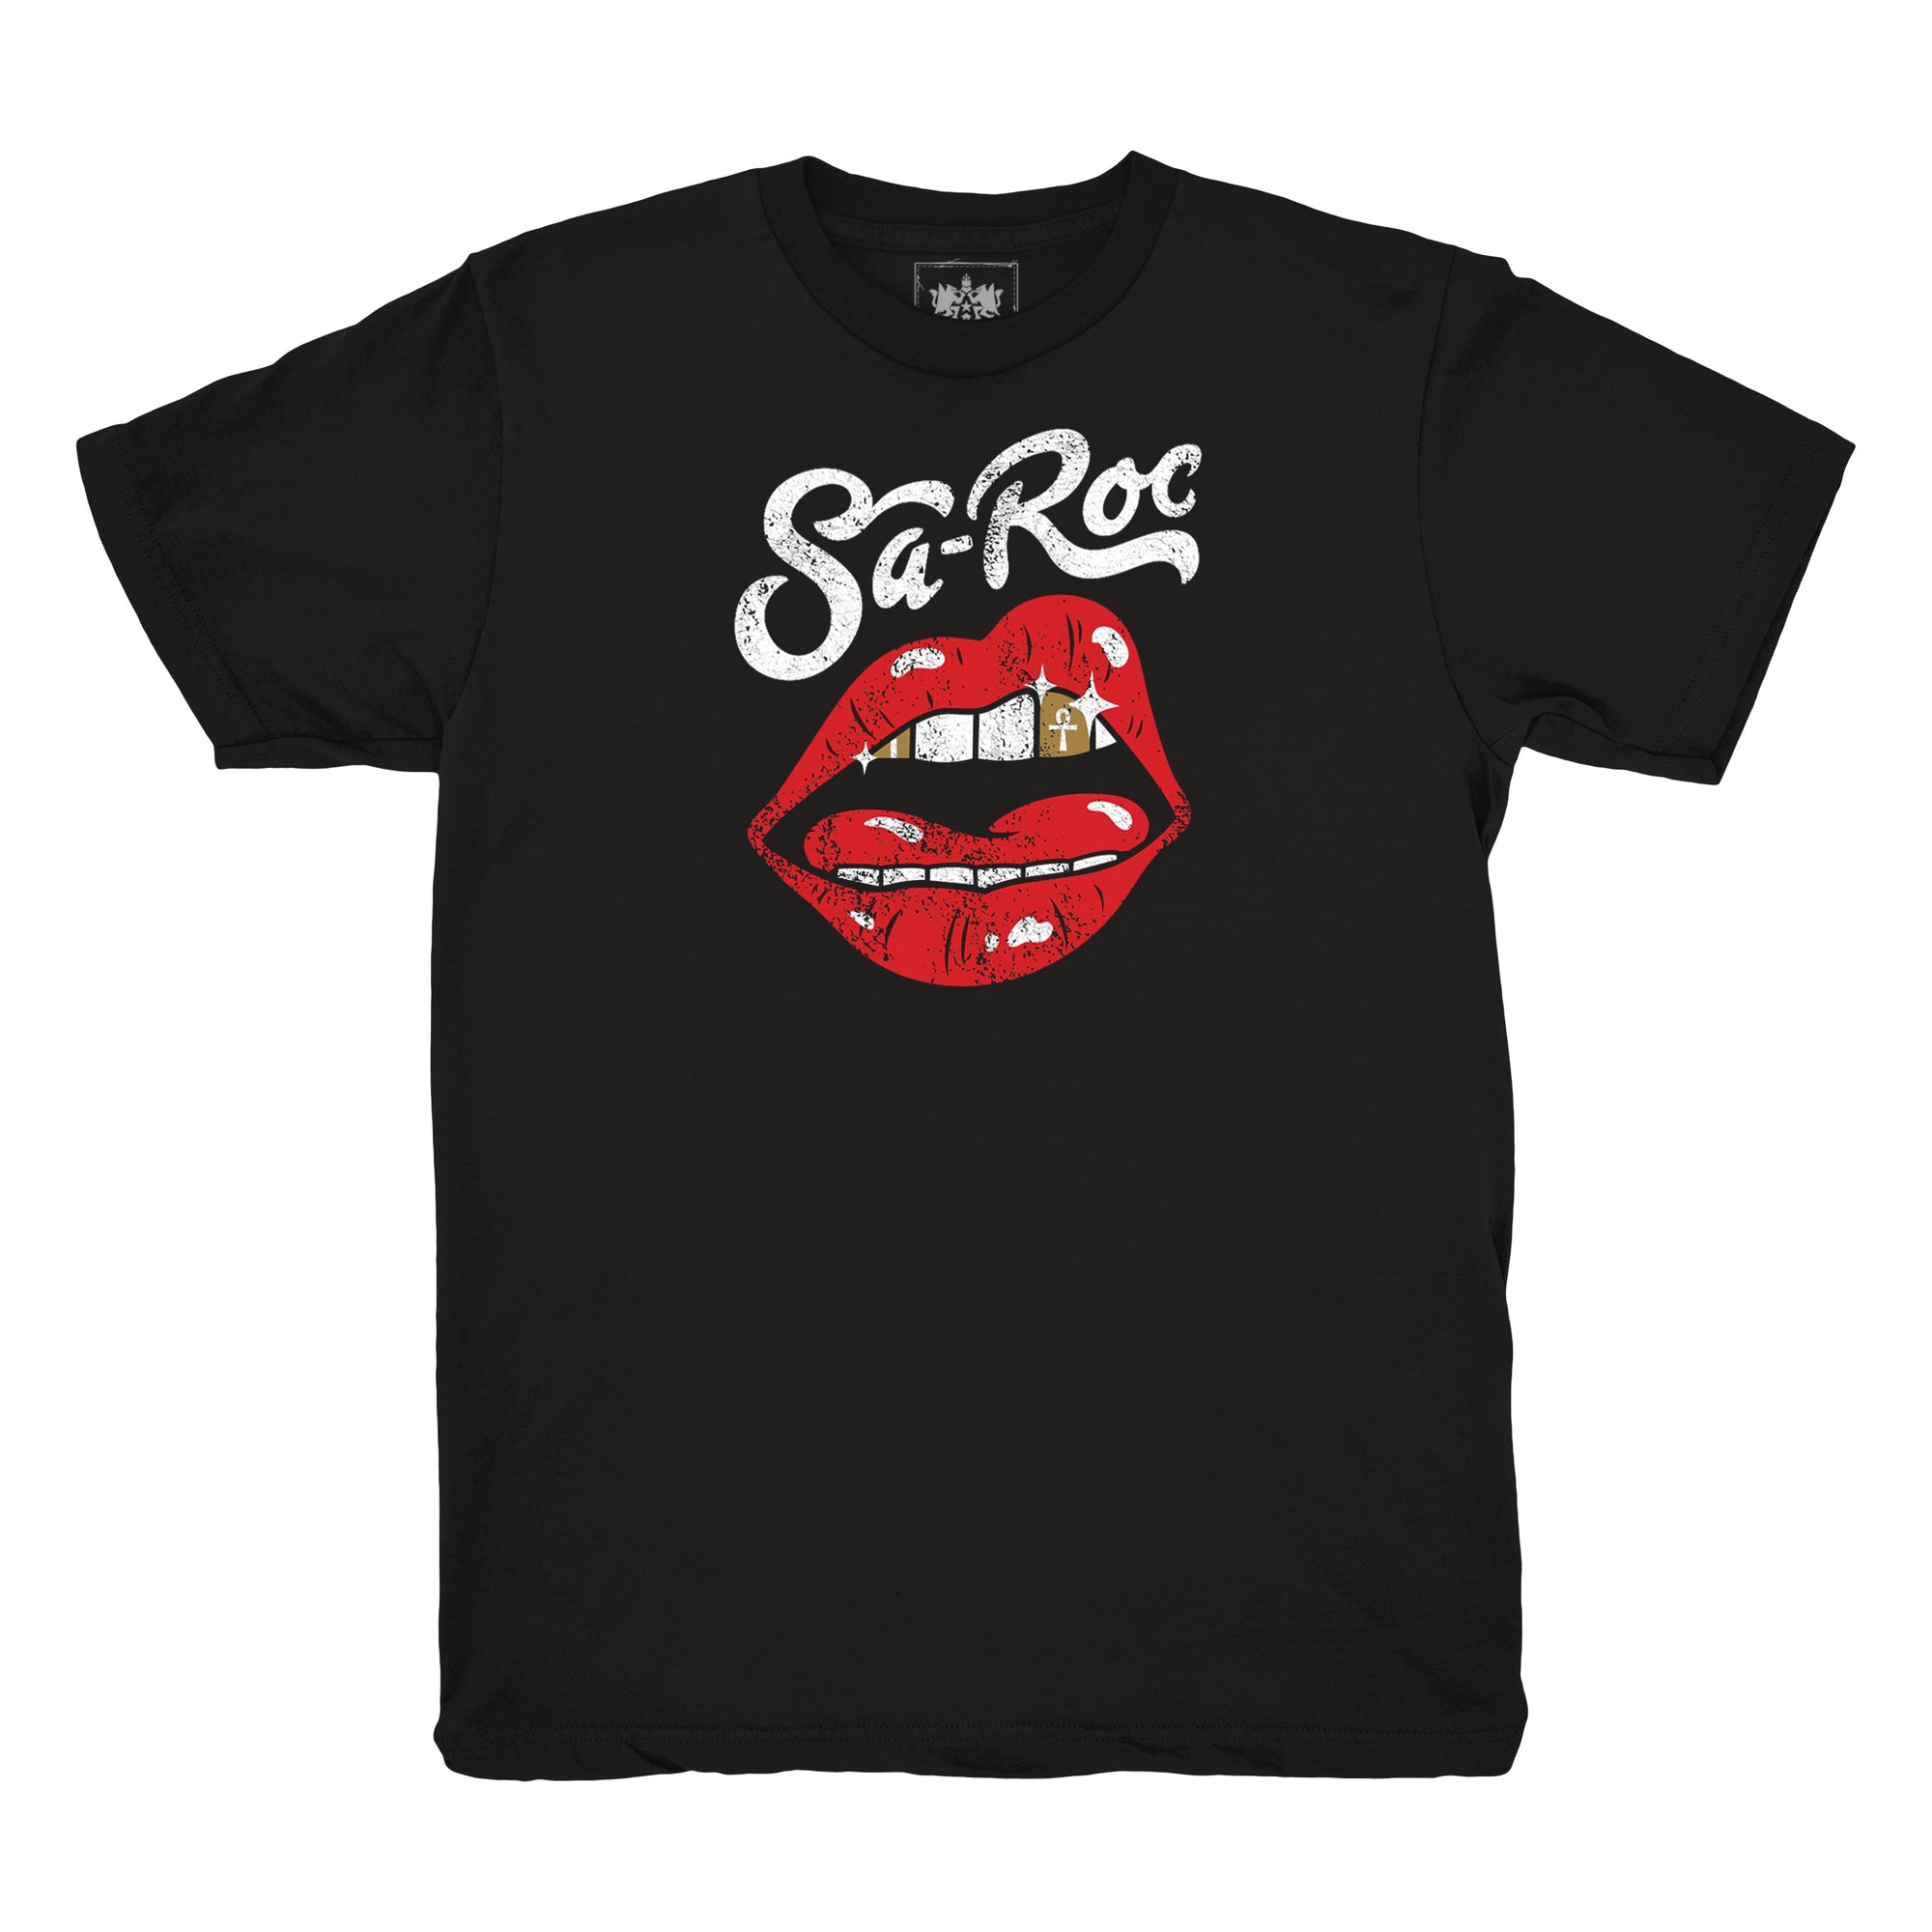 Sa-Roc - Mother Tongue Tour Shirt